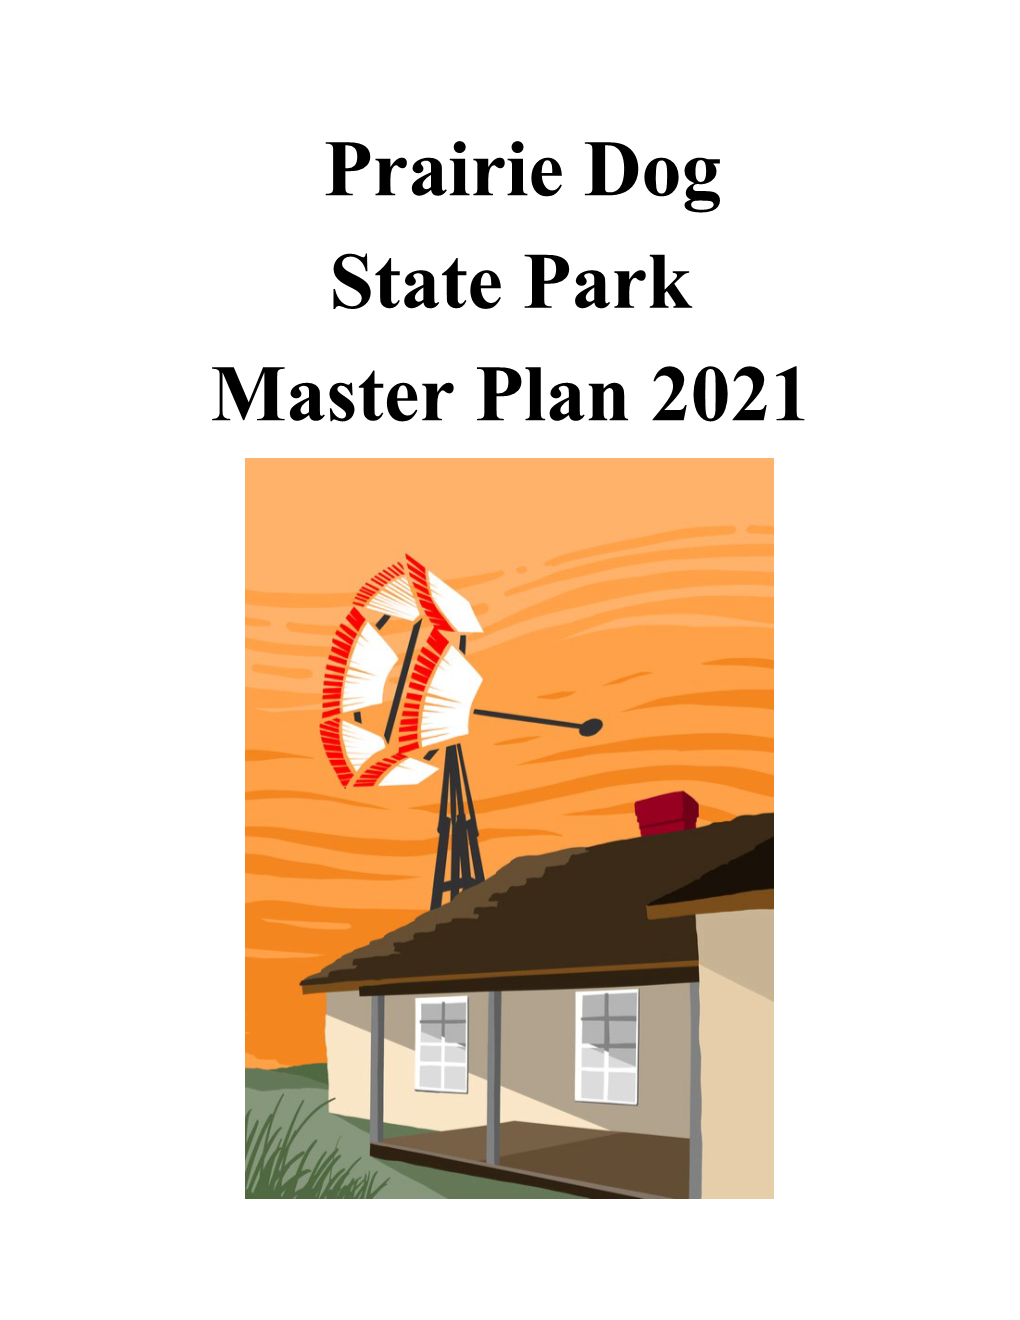 Prairie Dog State Park Master Plan 2021